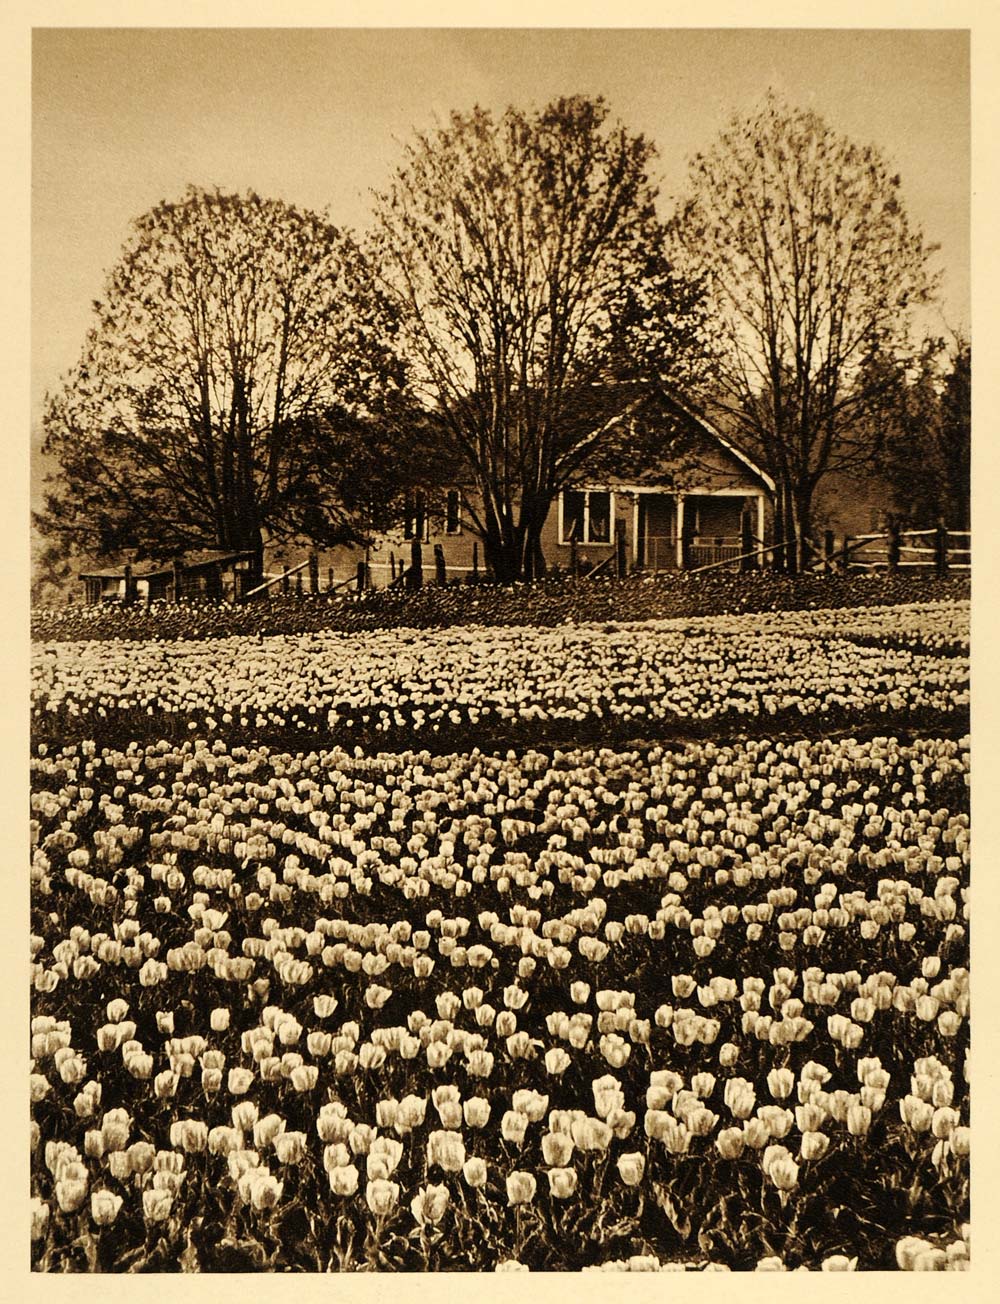 1926 Tulip Bulb Farm House Victoria Vancouver Island BC - ORIGINAL CAN2